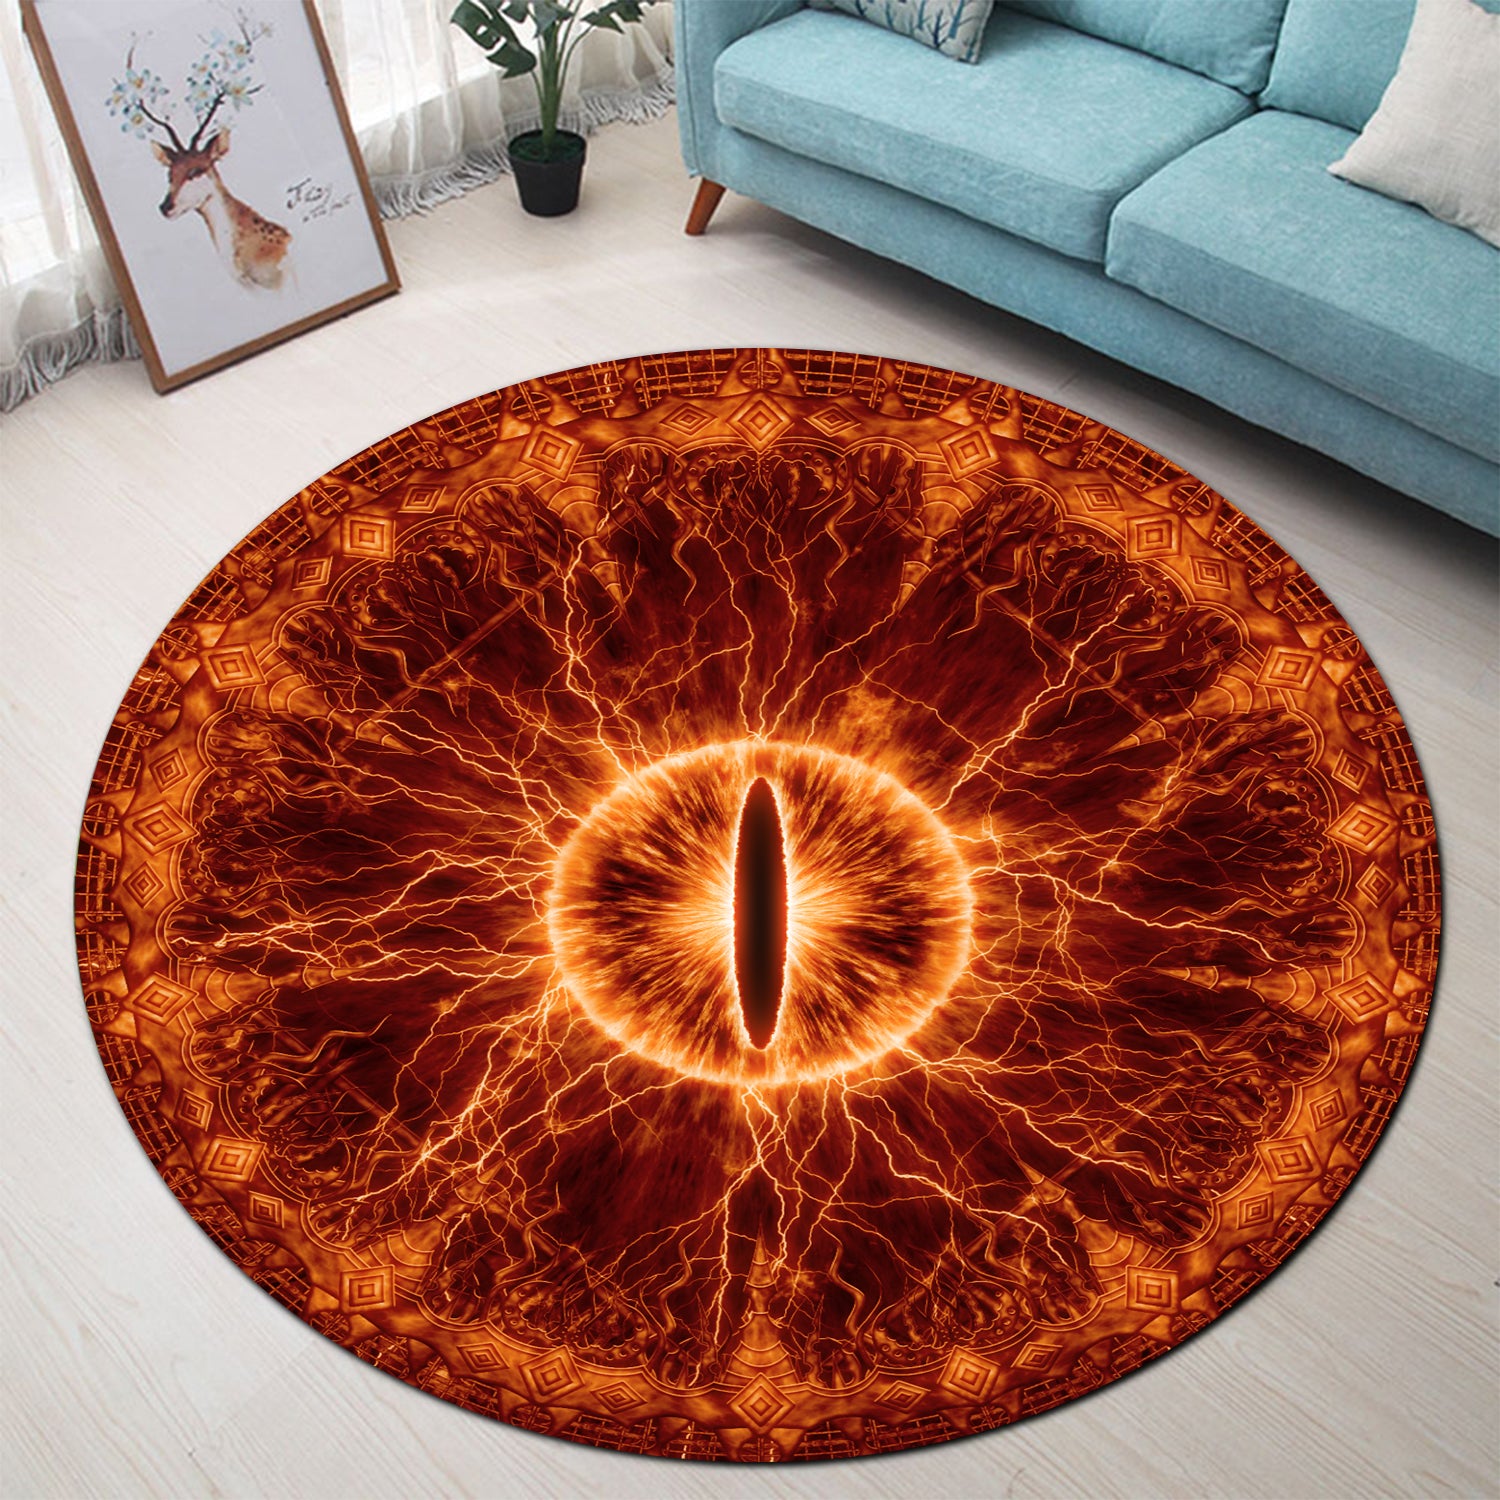 Lord Of Rings Sauron Eye Round Carpet Rug Bedroom Livingroom Home Decor Nearkii